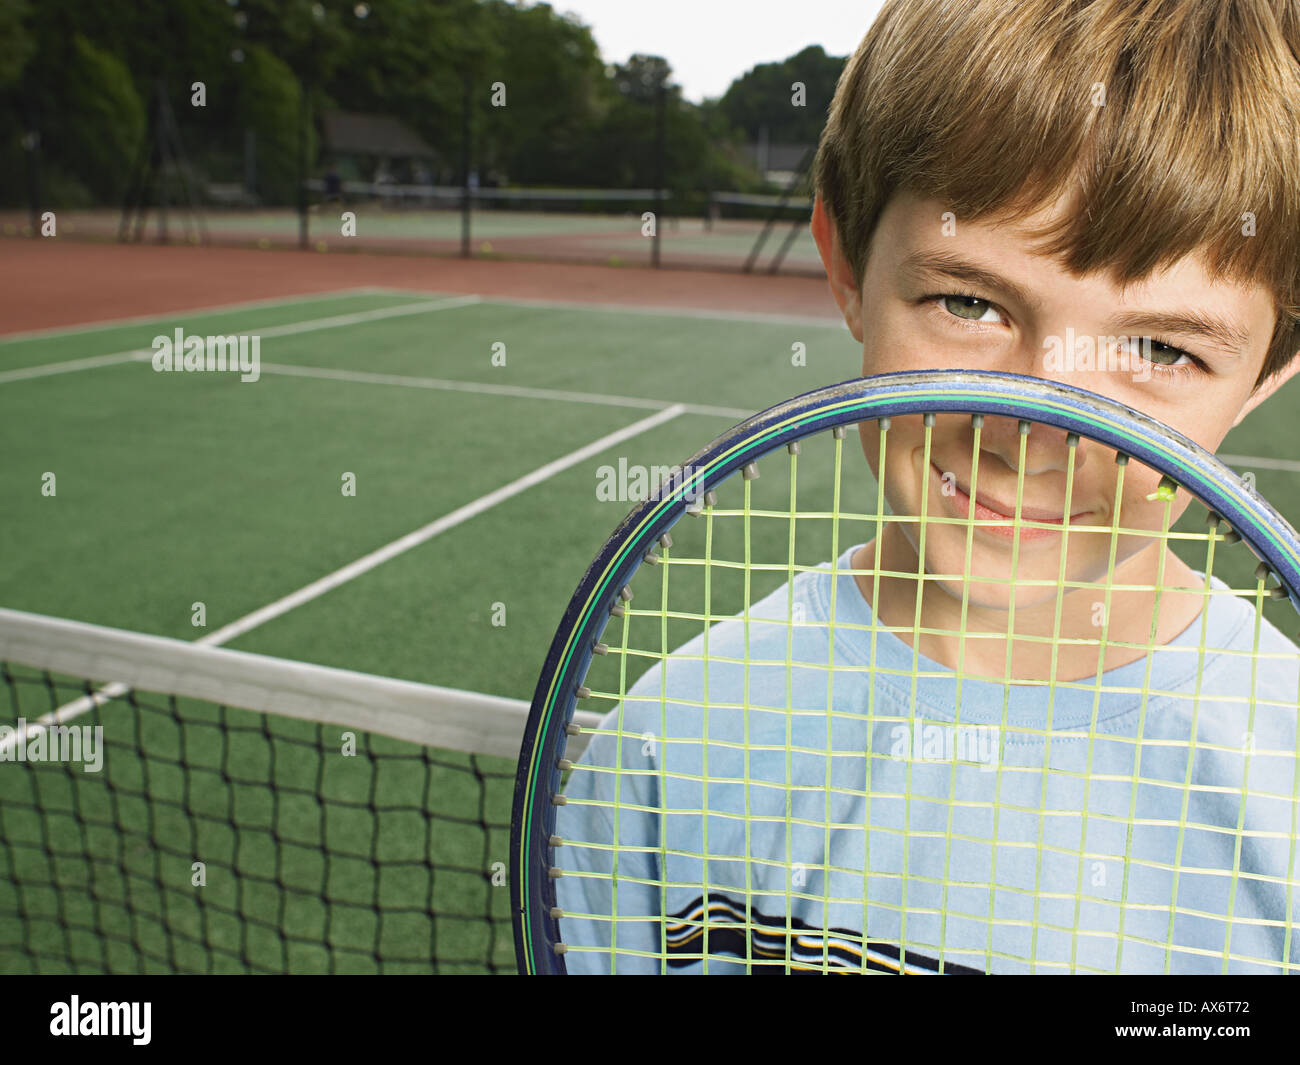 Boy with tennis racket Stock Photo